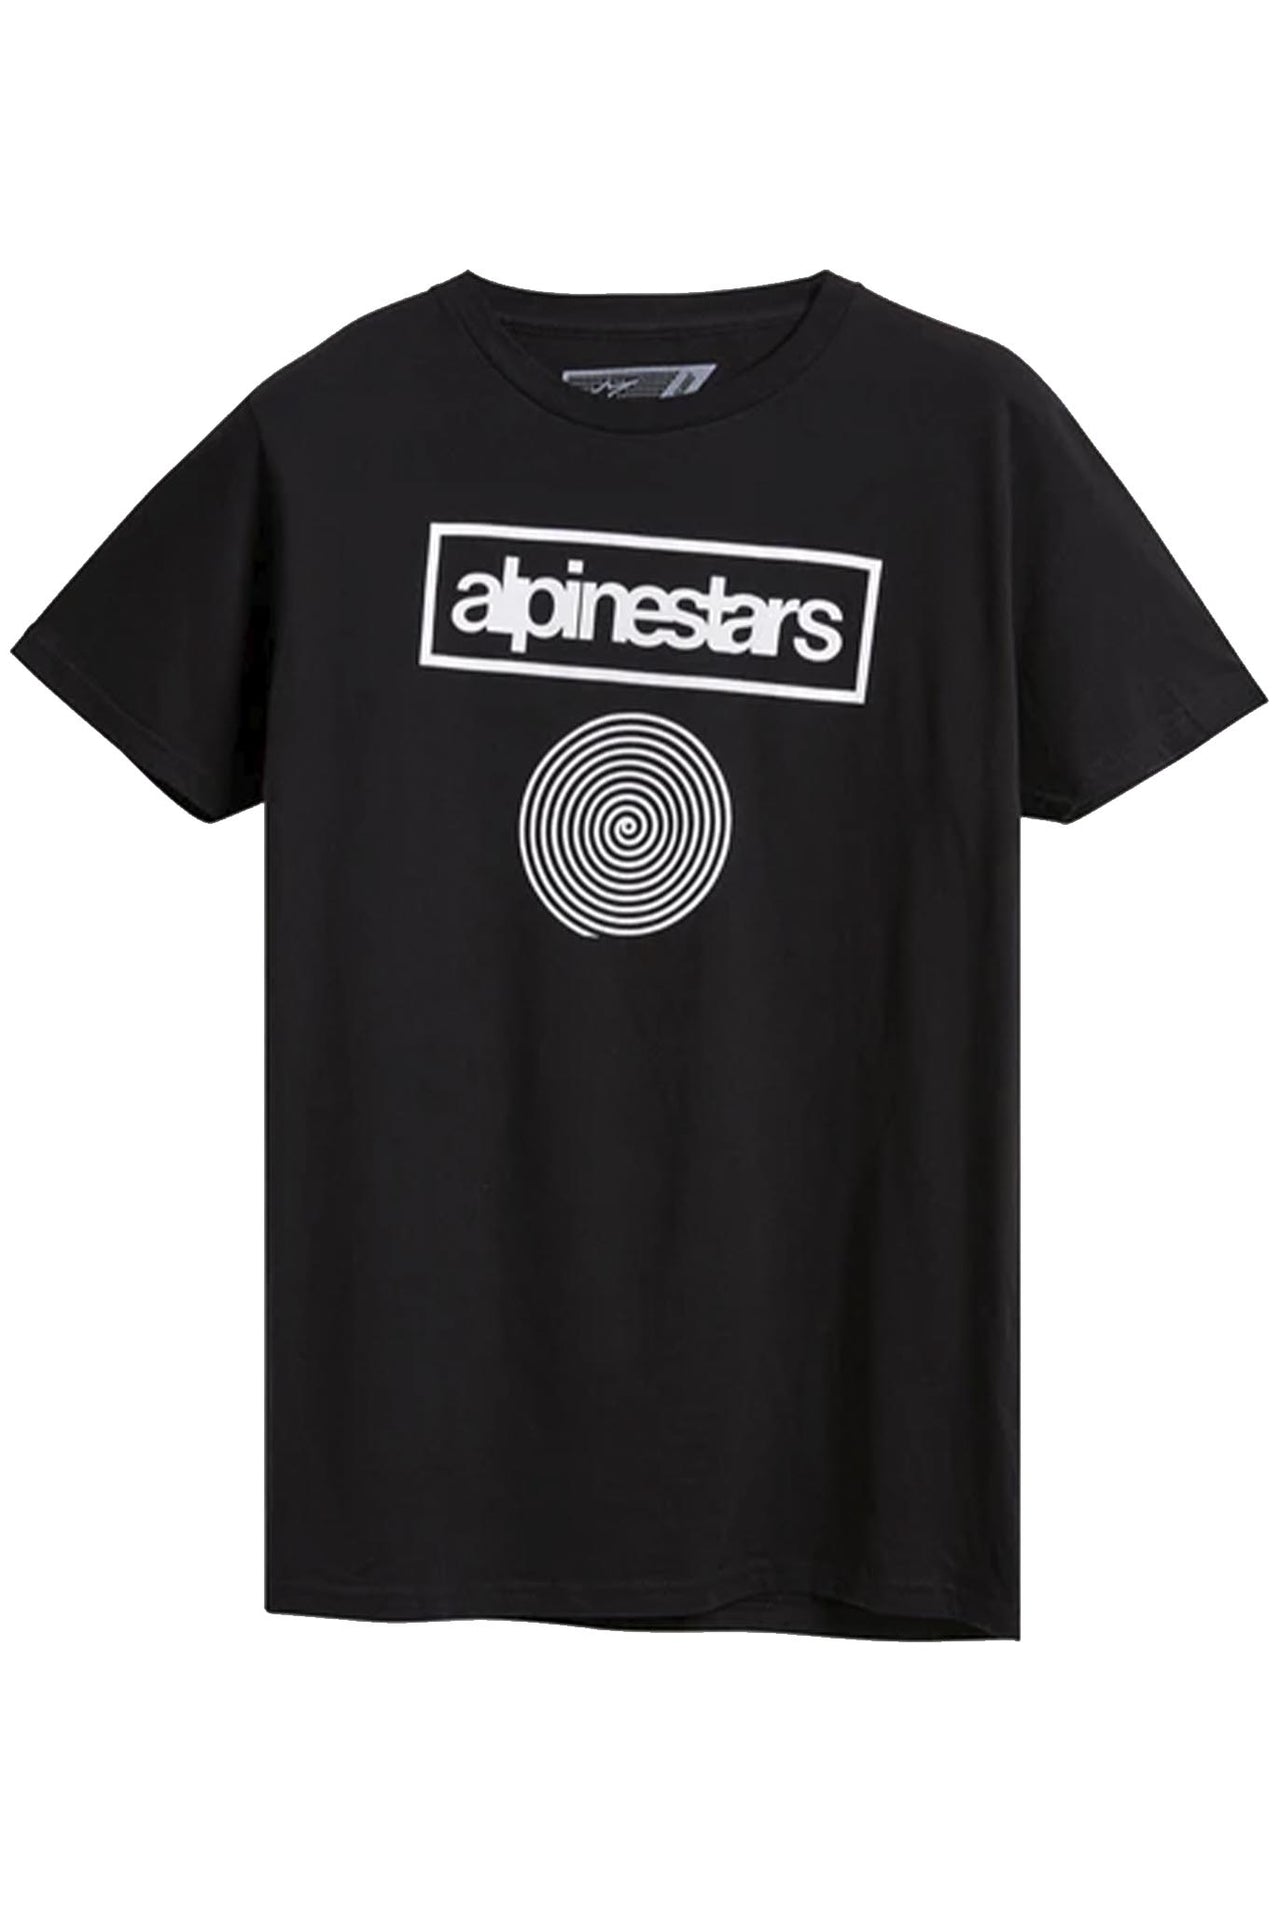 Camiseta Alpinestar Spun black